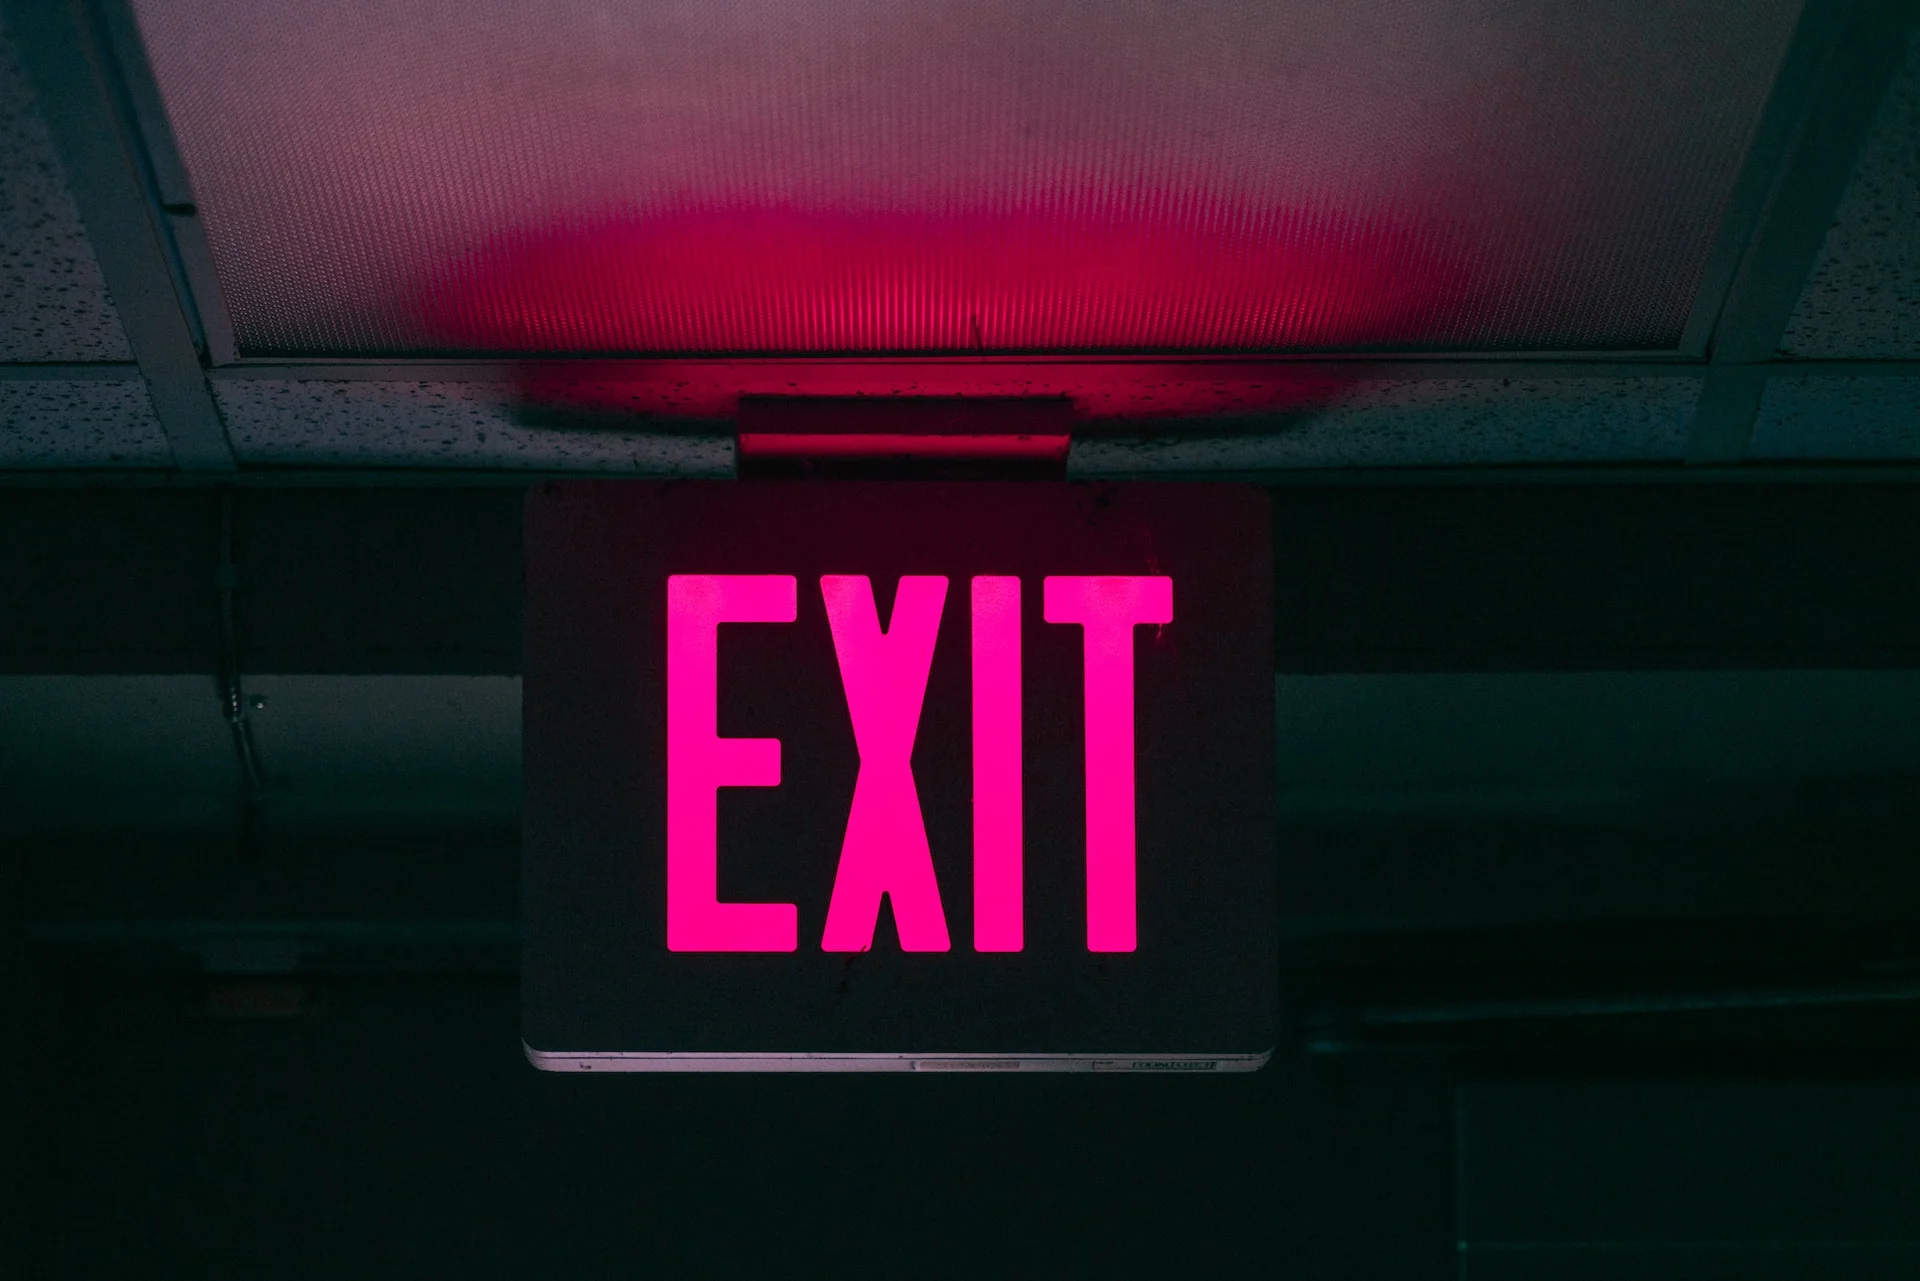 exit lights